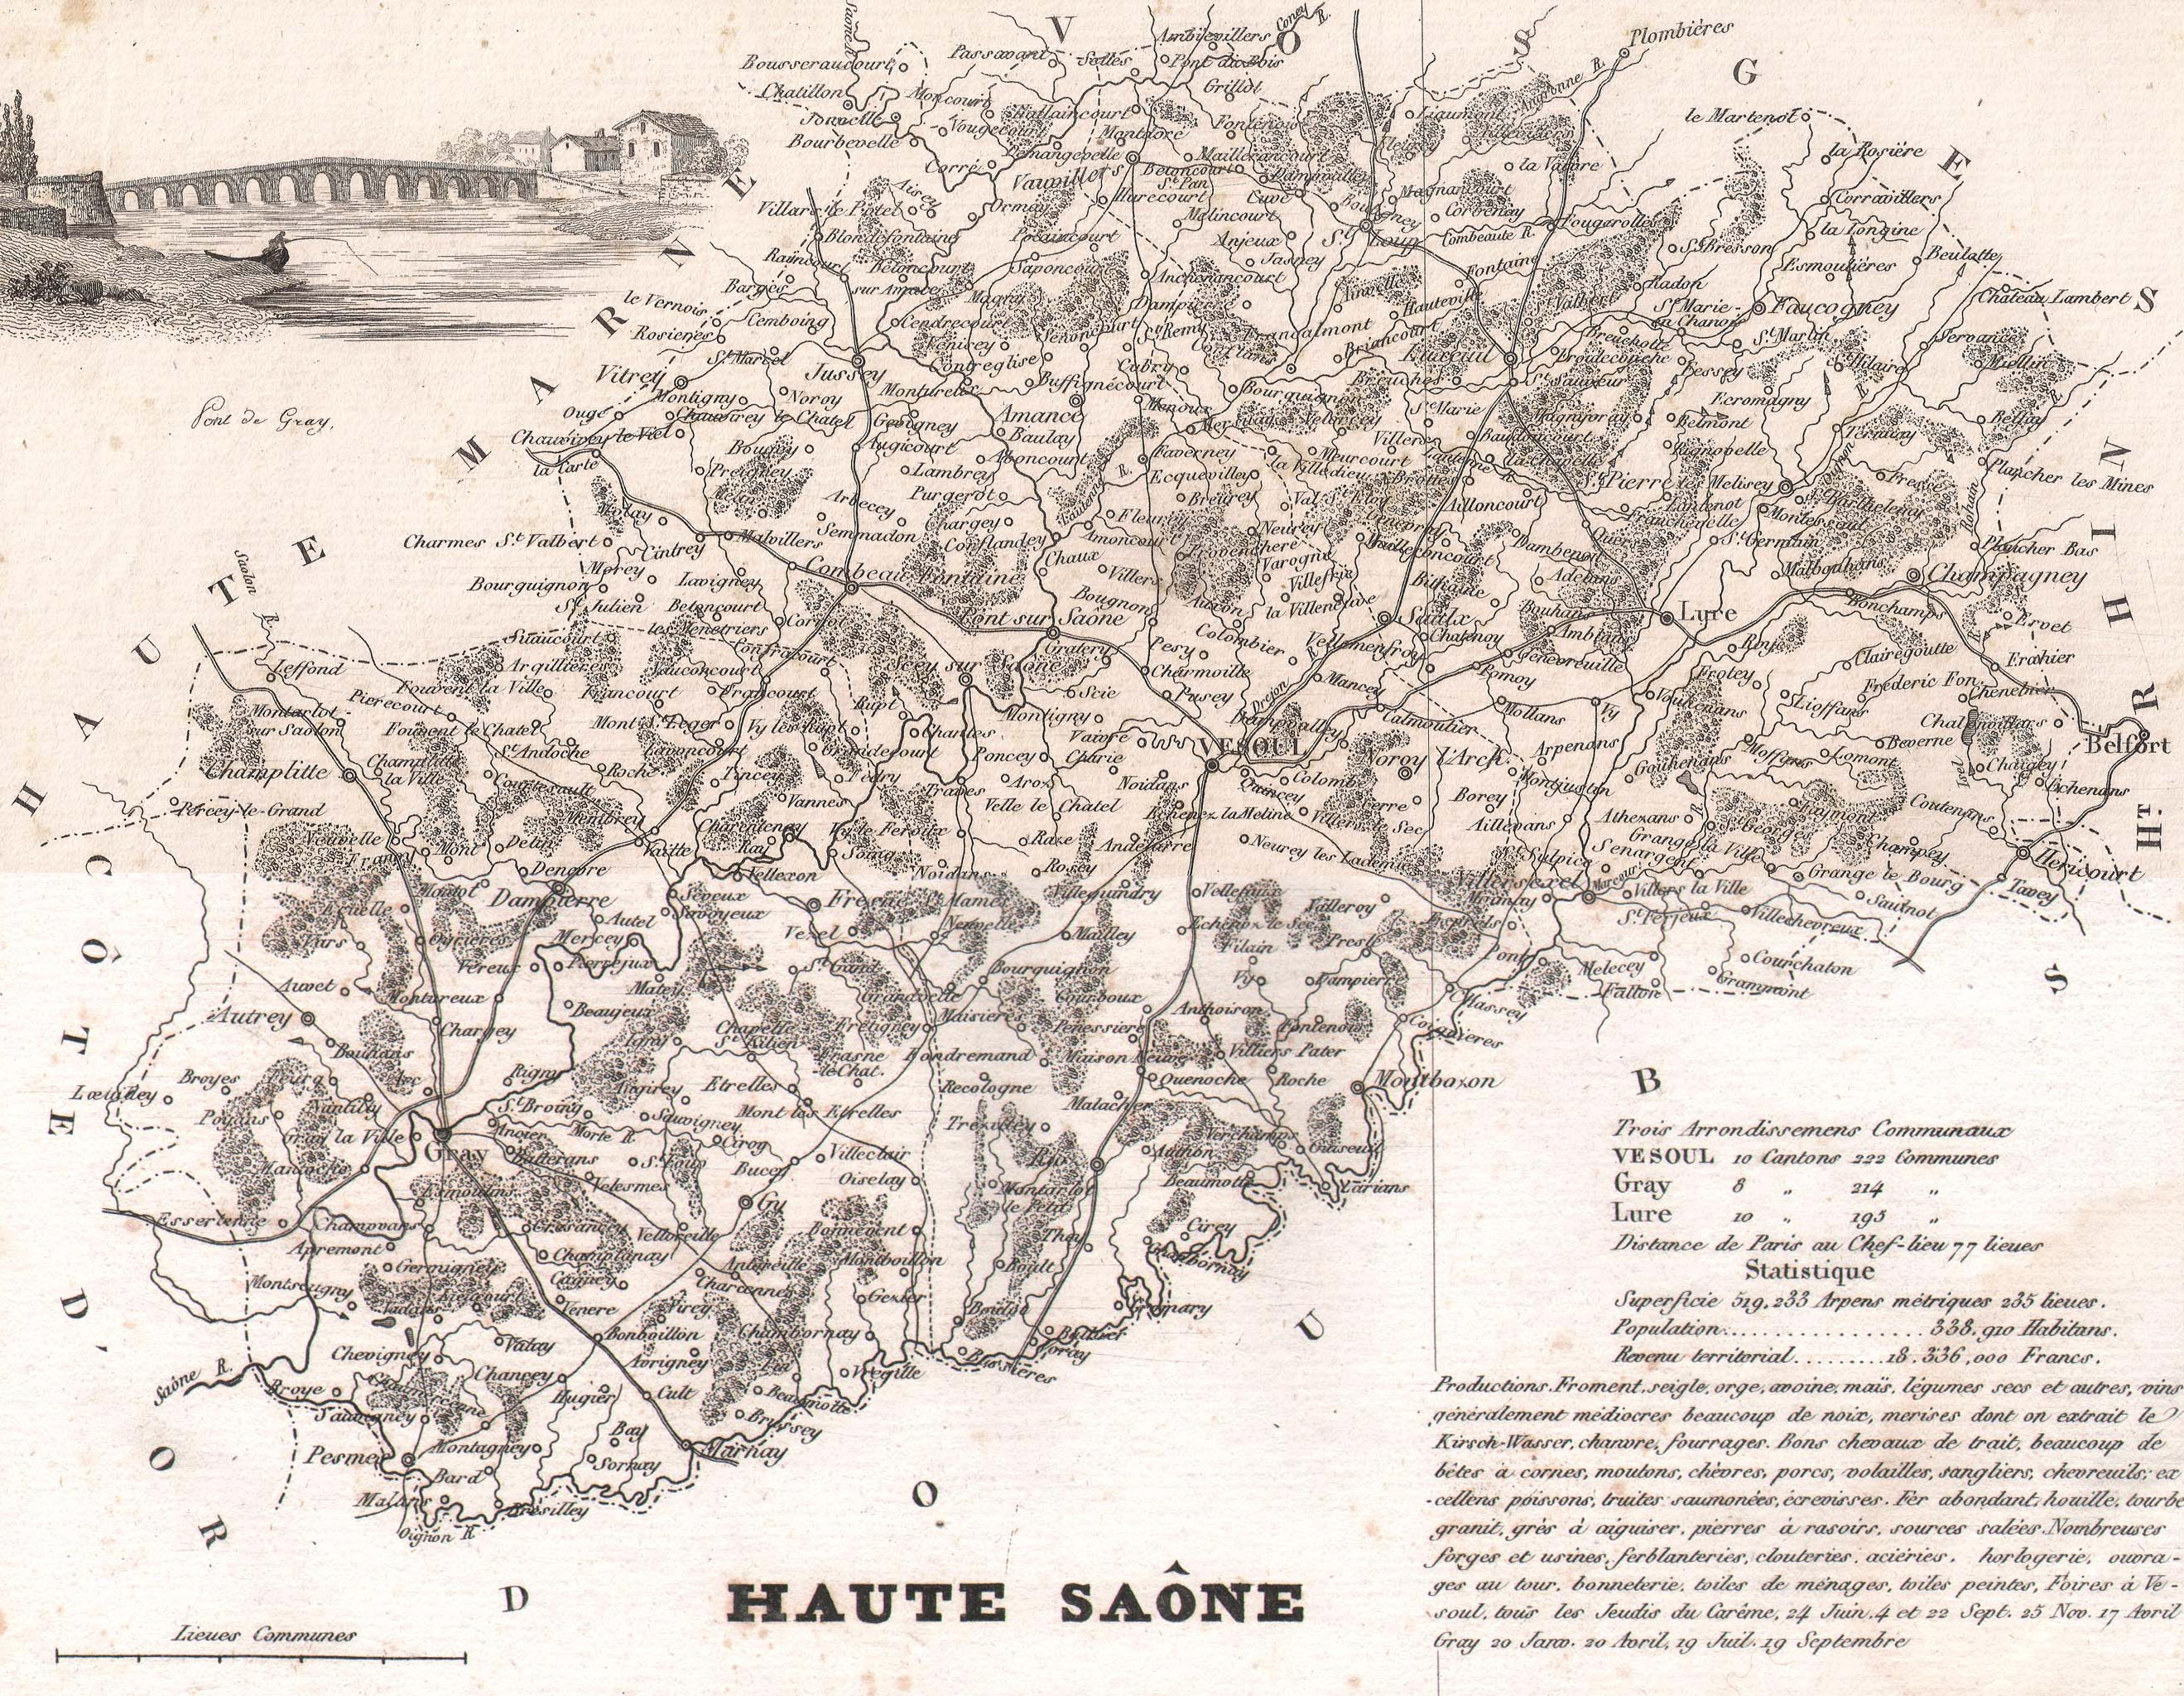 70 - Haute-Saône